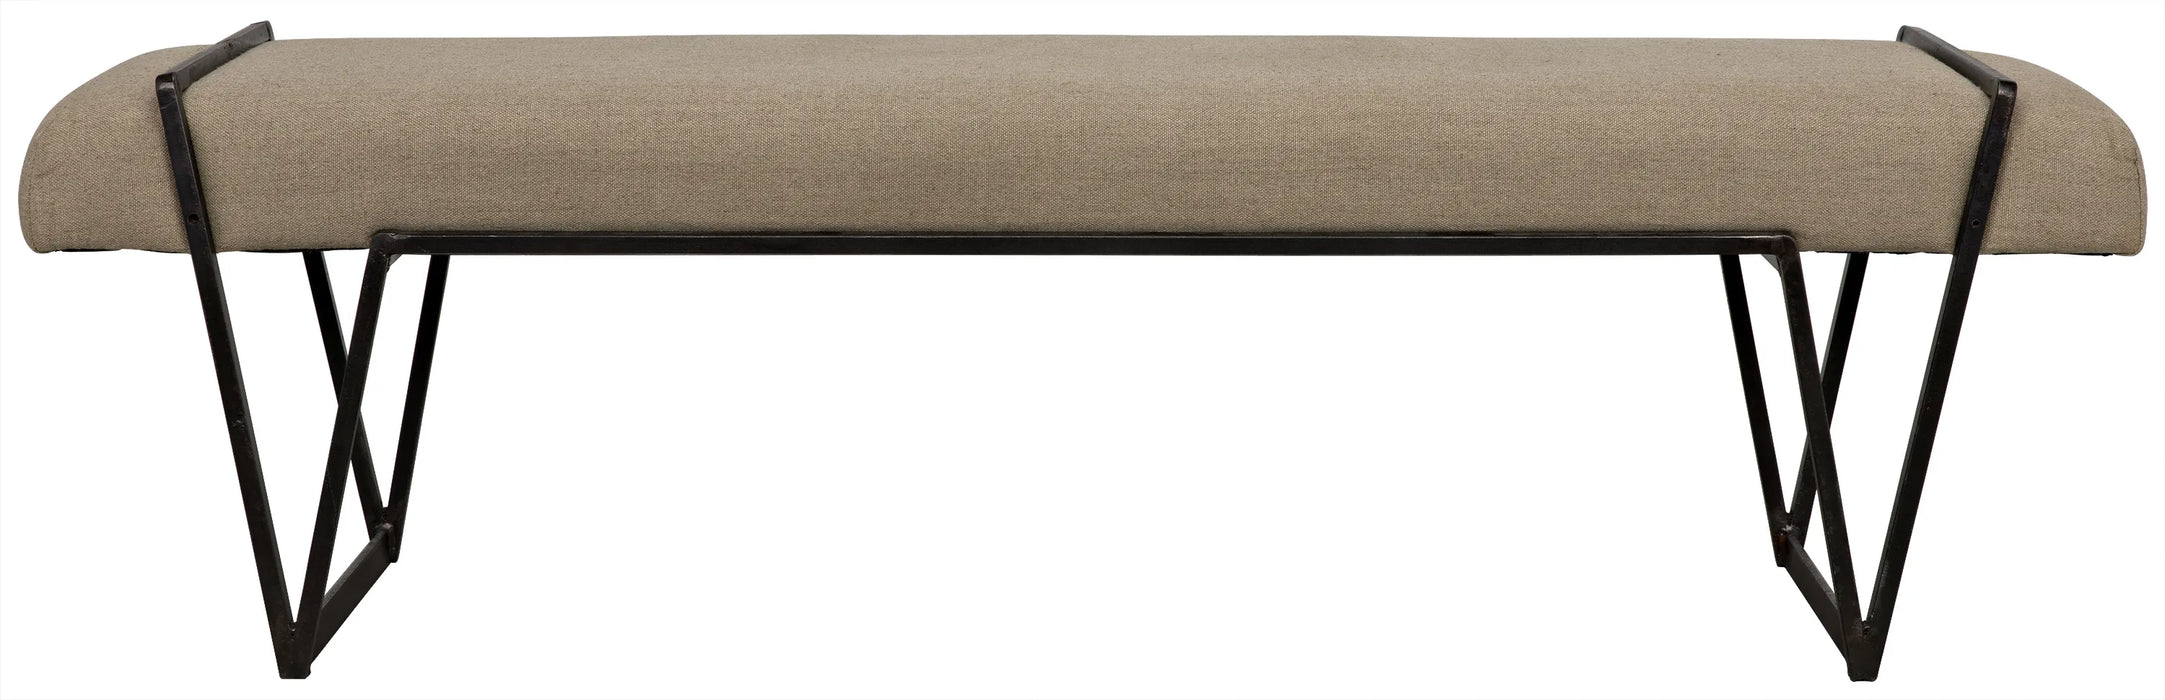 NOIR Furniture - Larkin Bench, Steel with Linen - GBEN137MTB